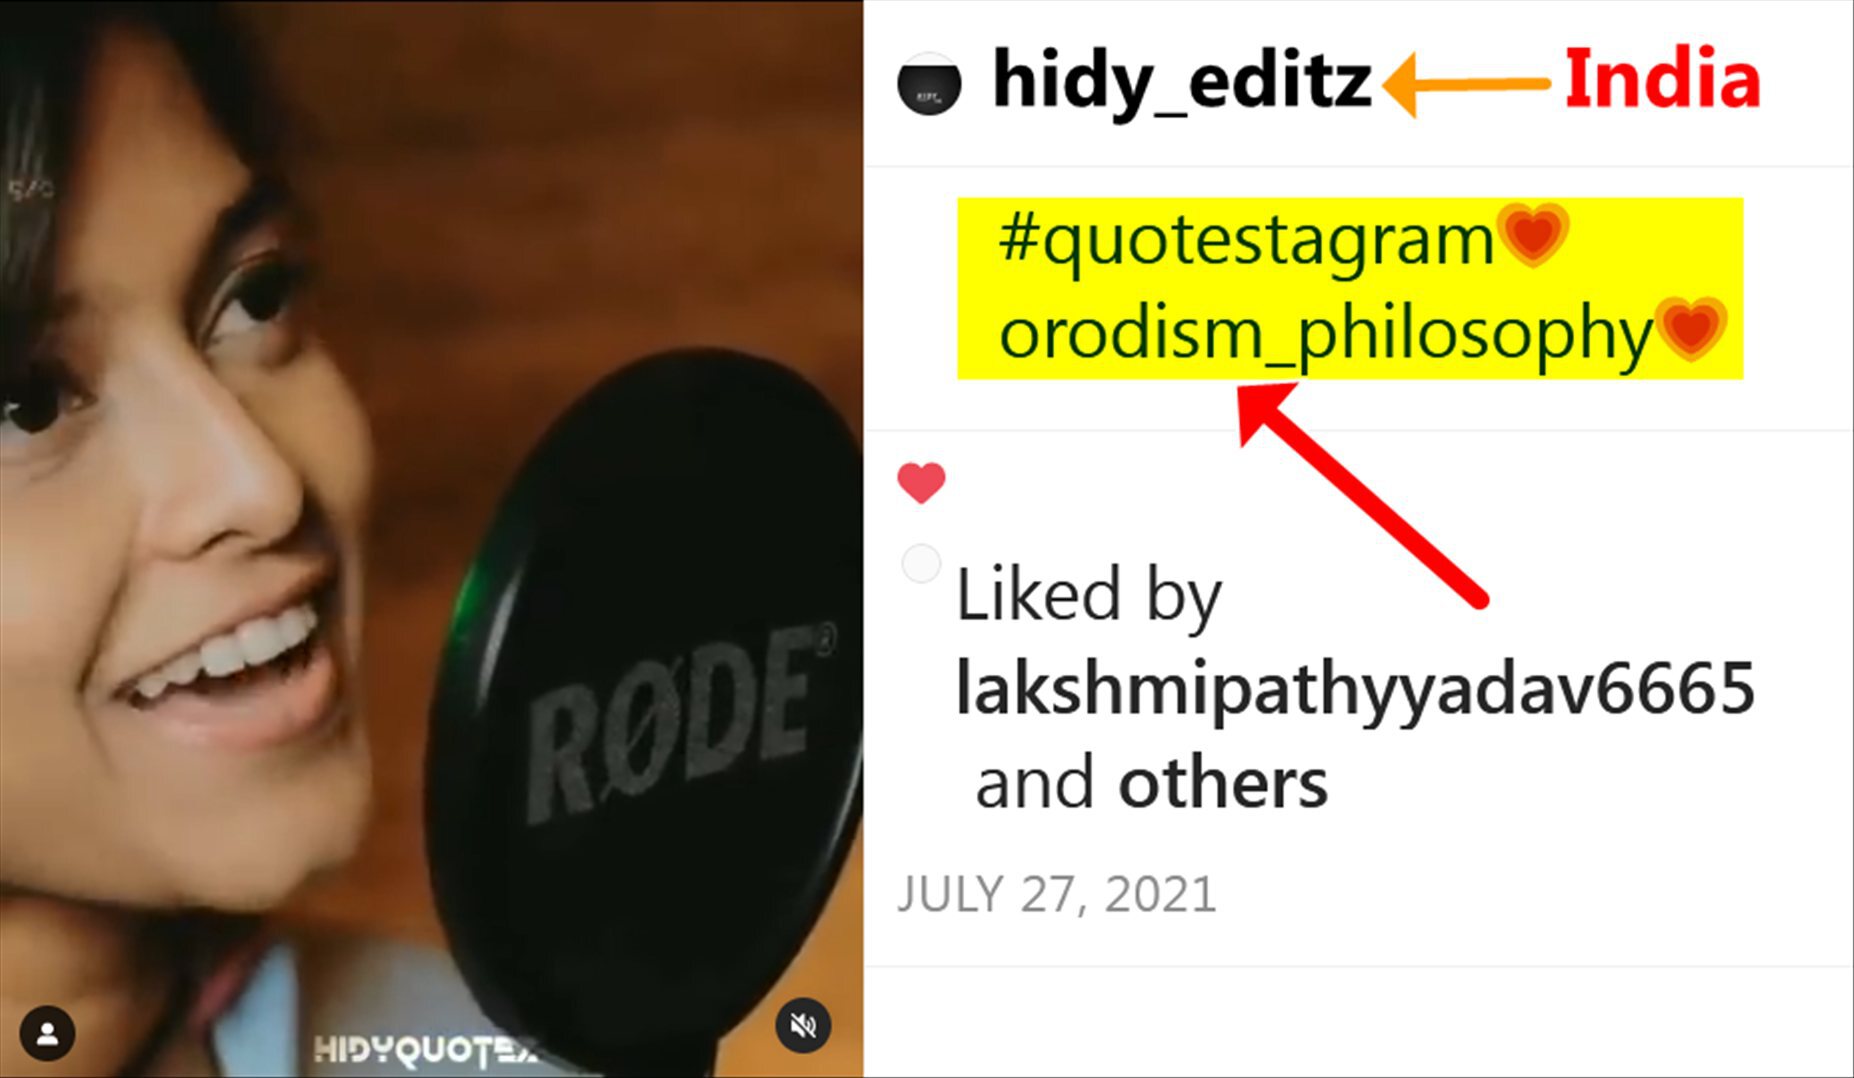  The philosophy of Orodism in India 80d68a8cf5c0c50177ea5deb009c7af3